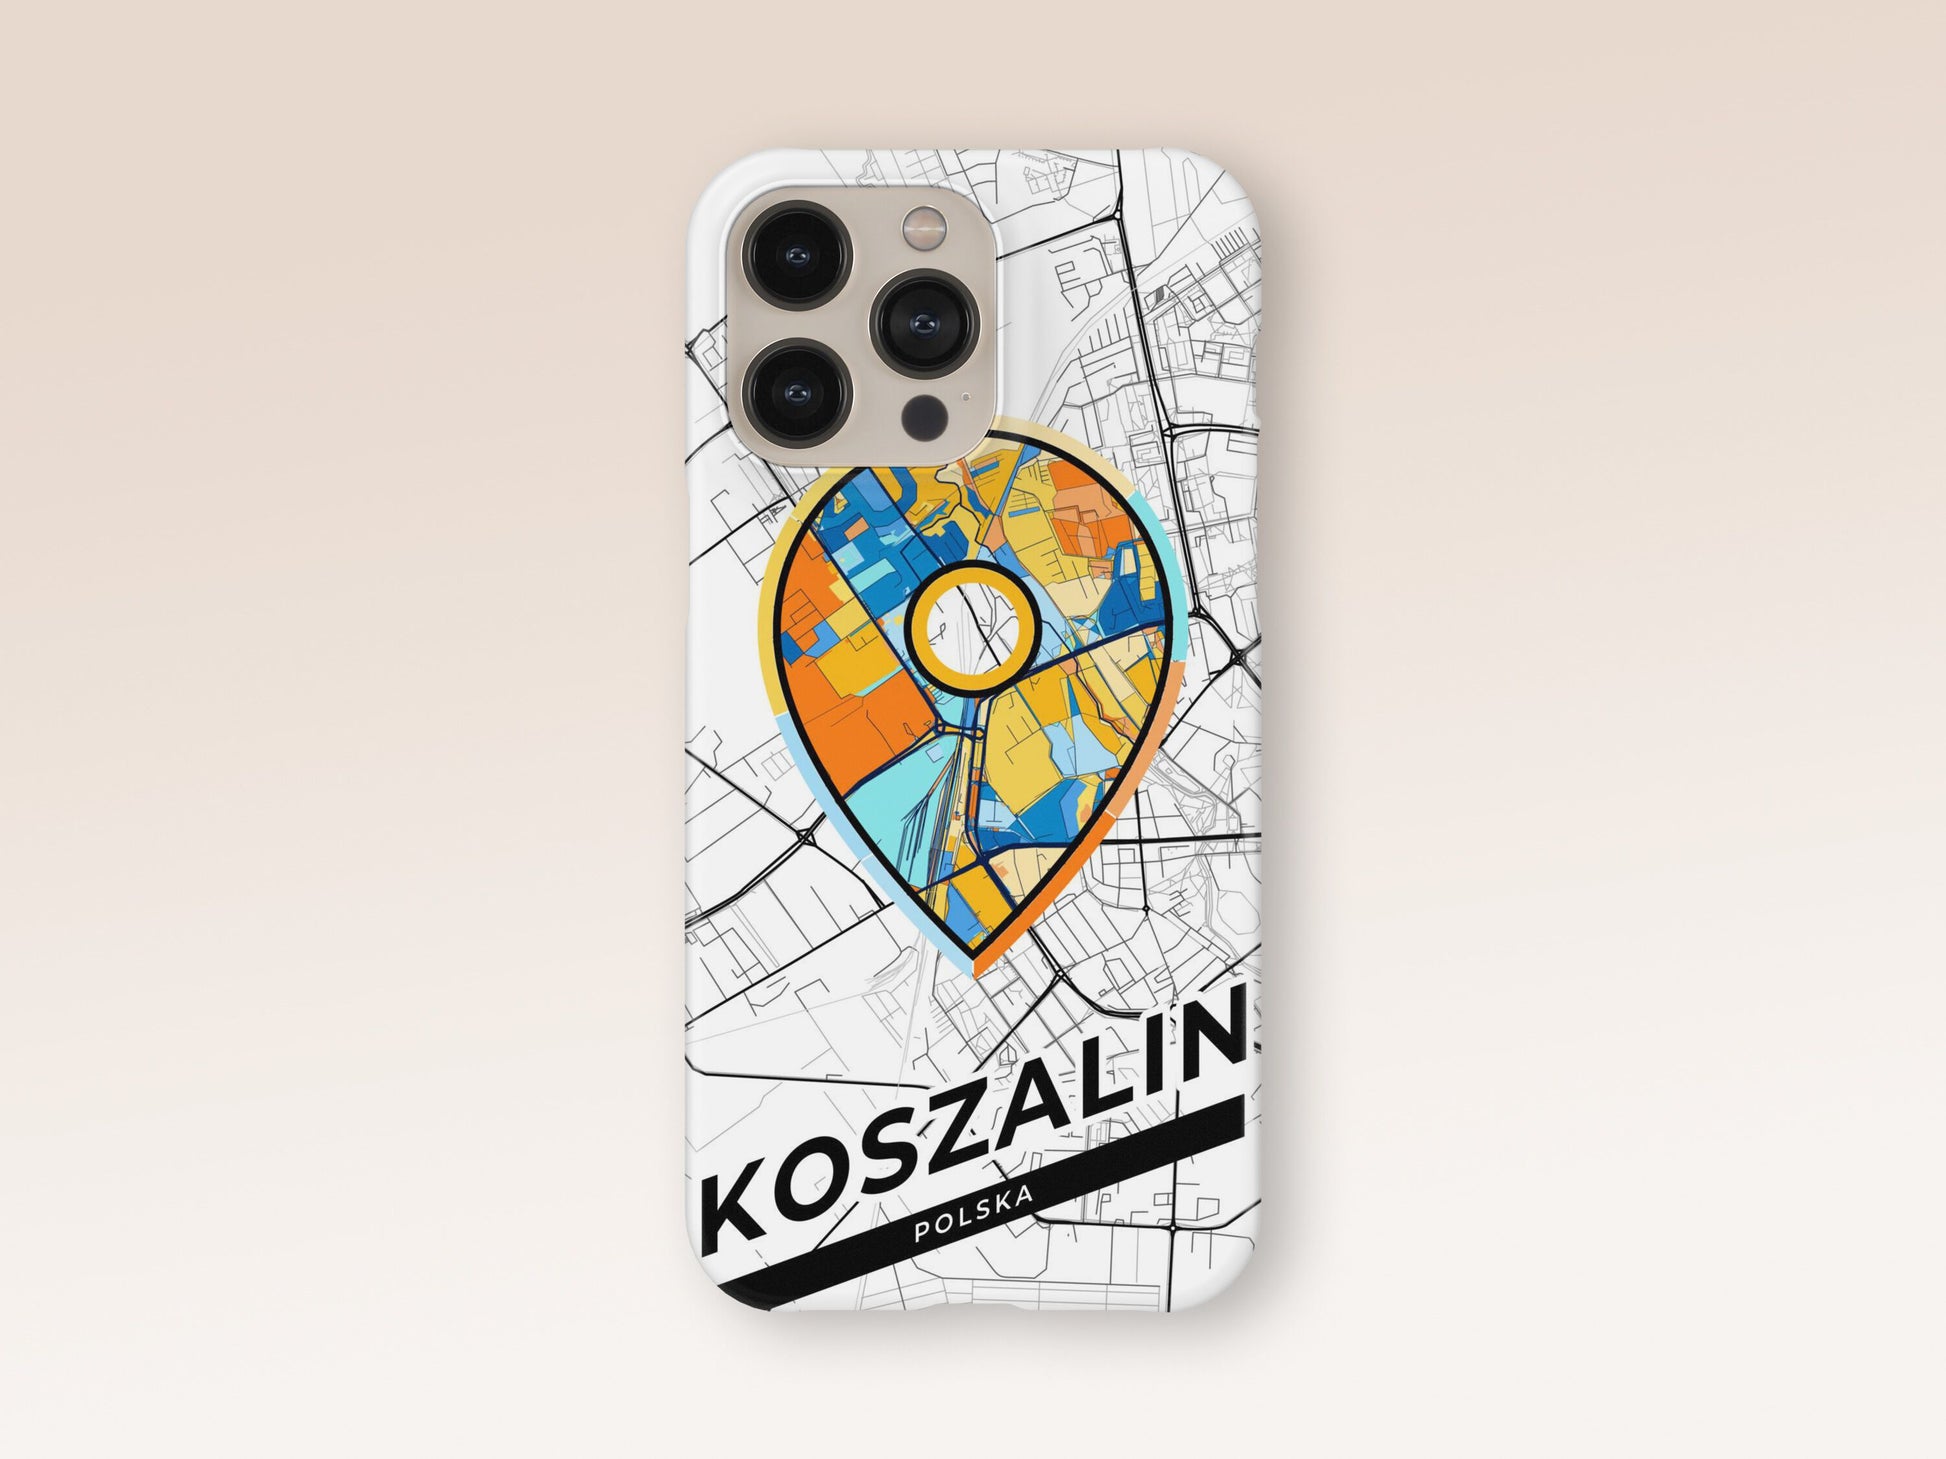 Koszalin Poland slim phone case with colorful icon. Birthday, wedding or housewarming gift. Couple match cases. 1